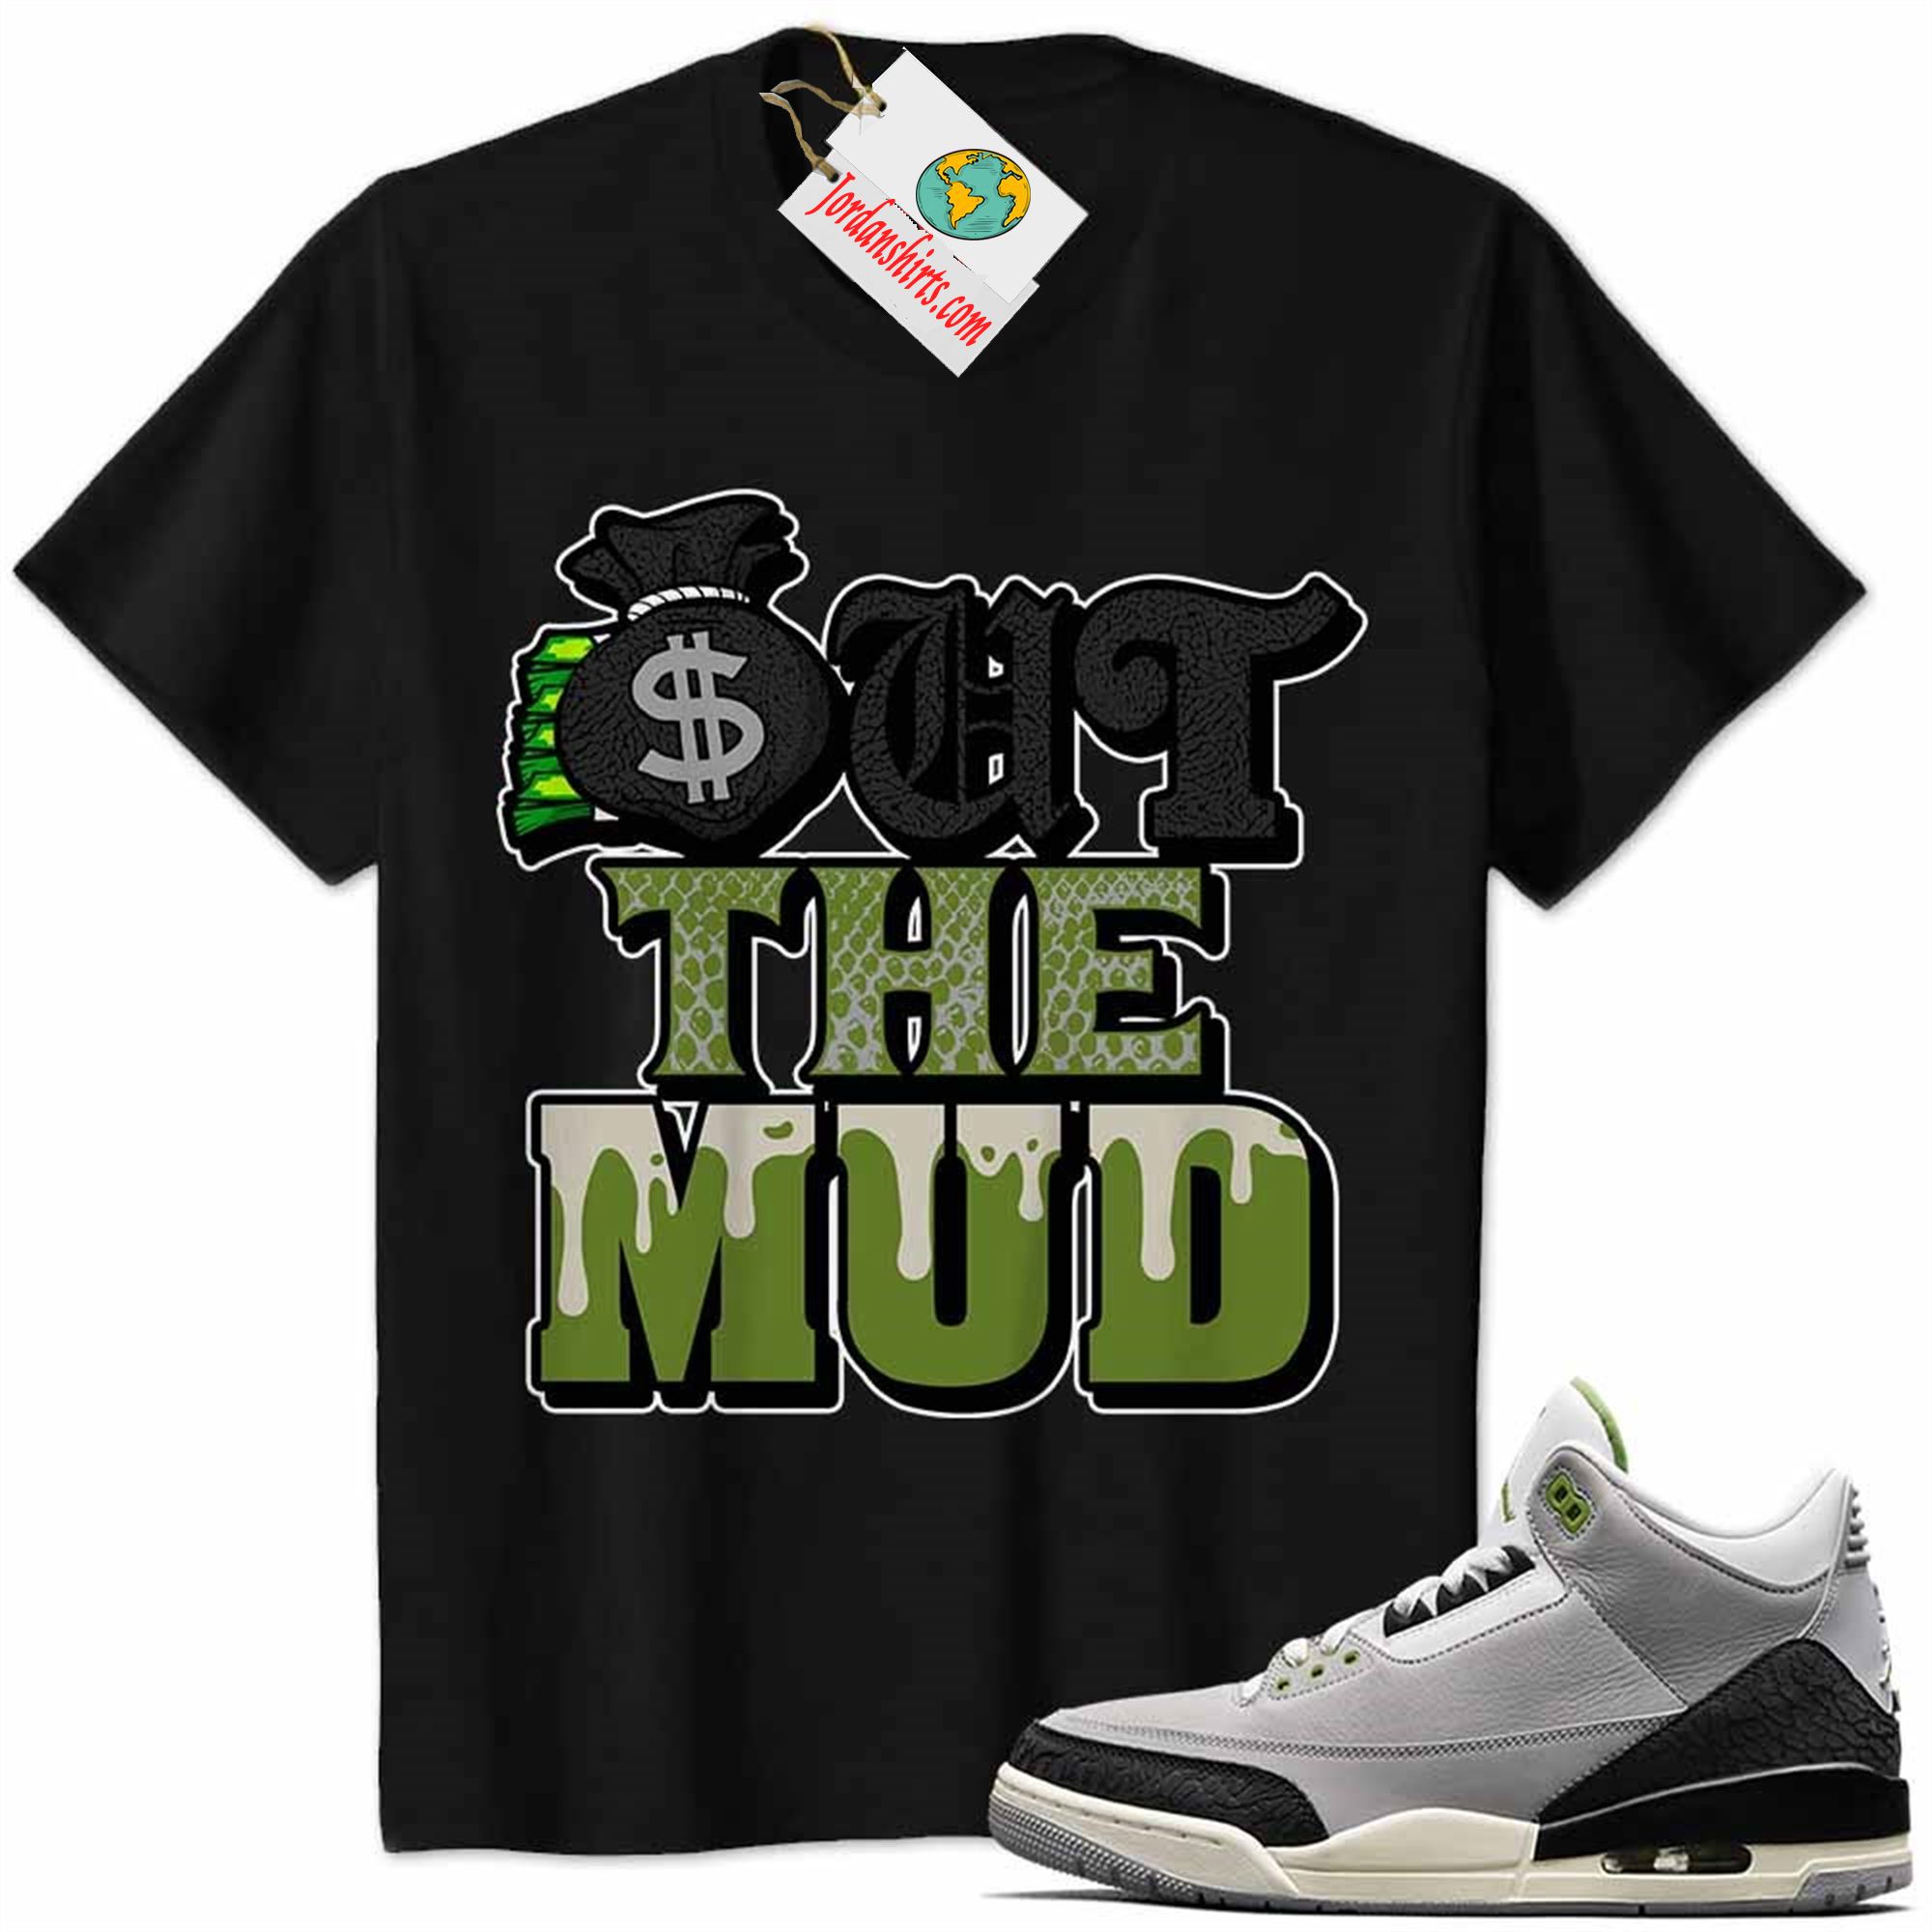 Jordan 3 Shirt, Jordan 3 Chlorophyll Shirt Out The Mud Money Bag Black Size Up To 5xl